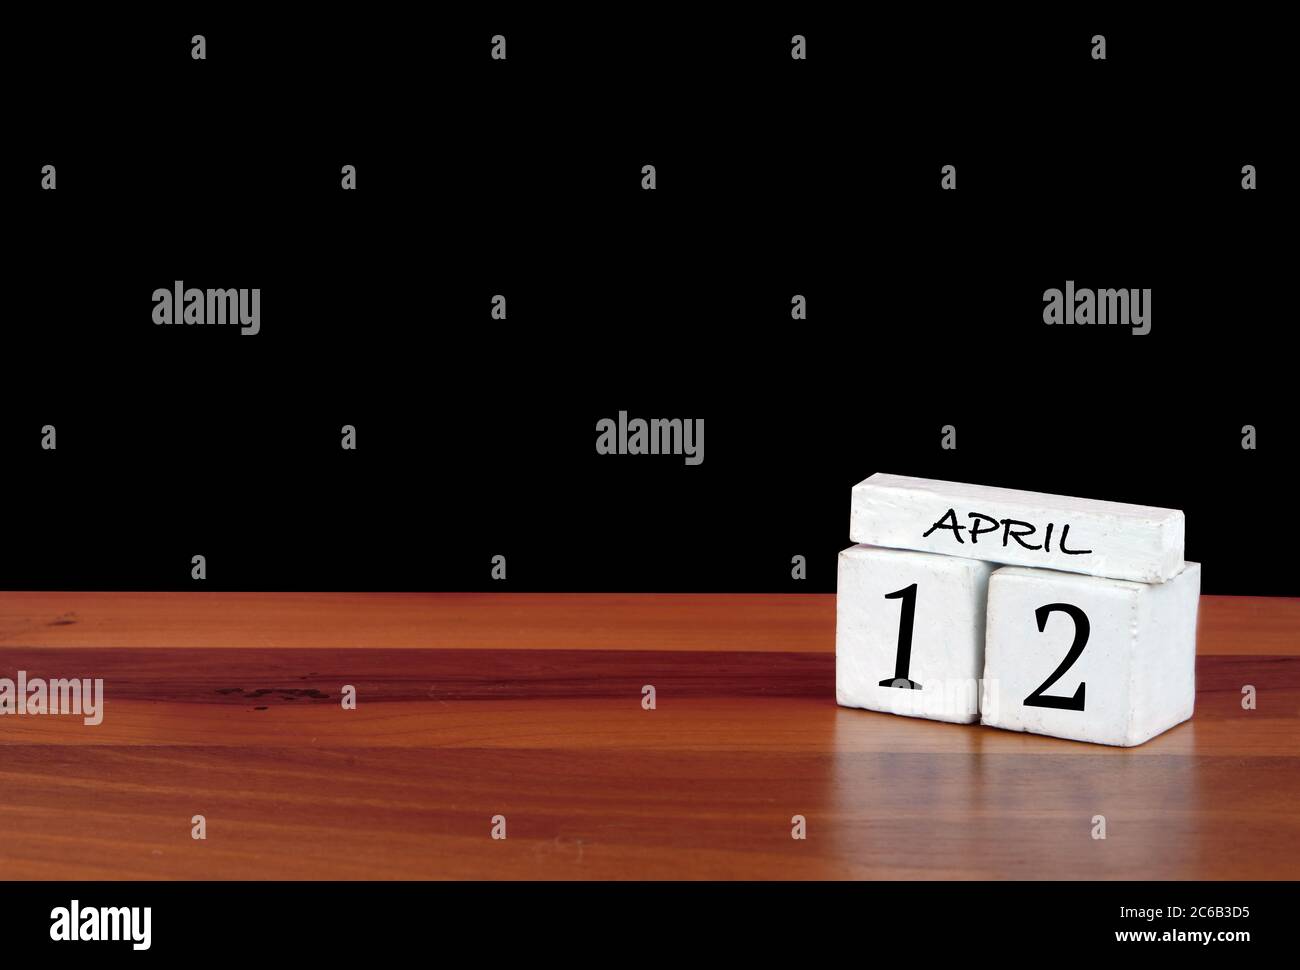 12 Abril calendario mes. 12 días del mes. Calendario reflejado en suelo de madera con fondo negro Foto de stock